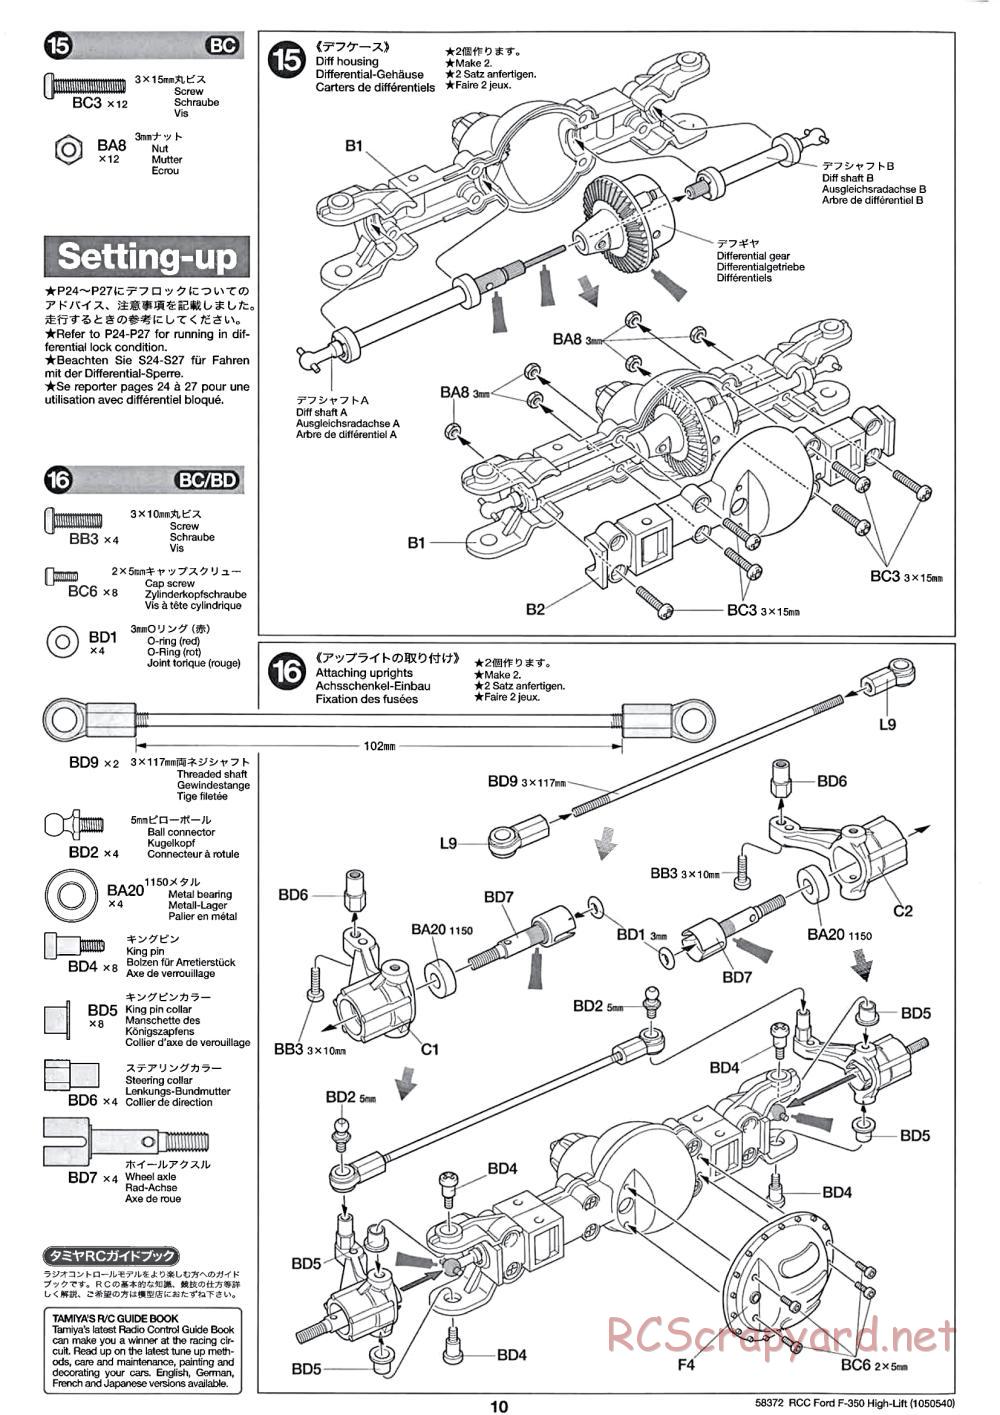 Tamiya - Ford F350 High-Lift Chassis - Manual - Page 10